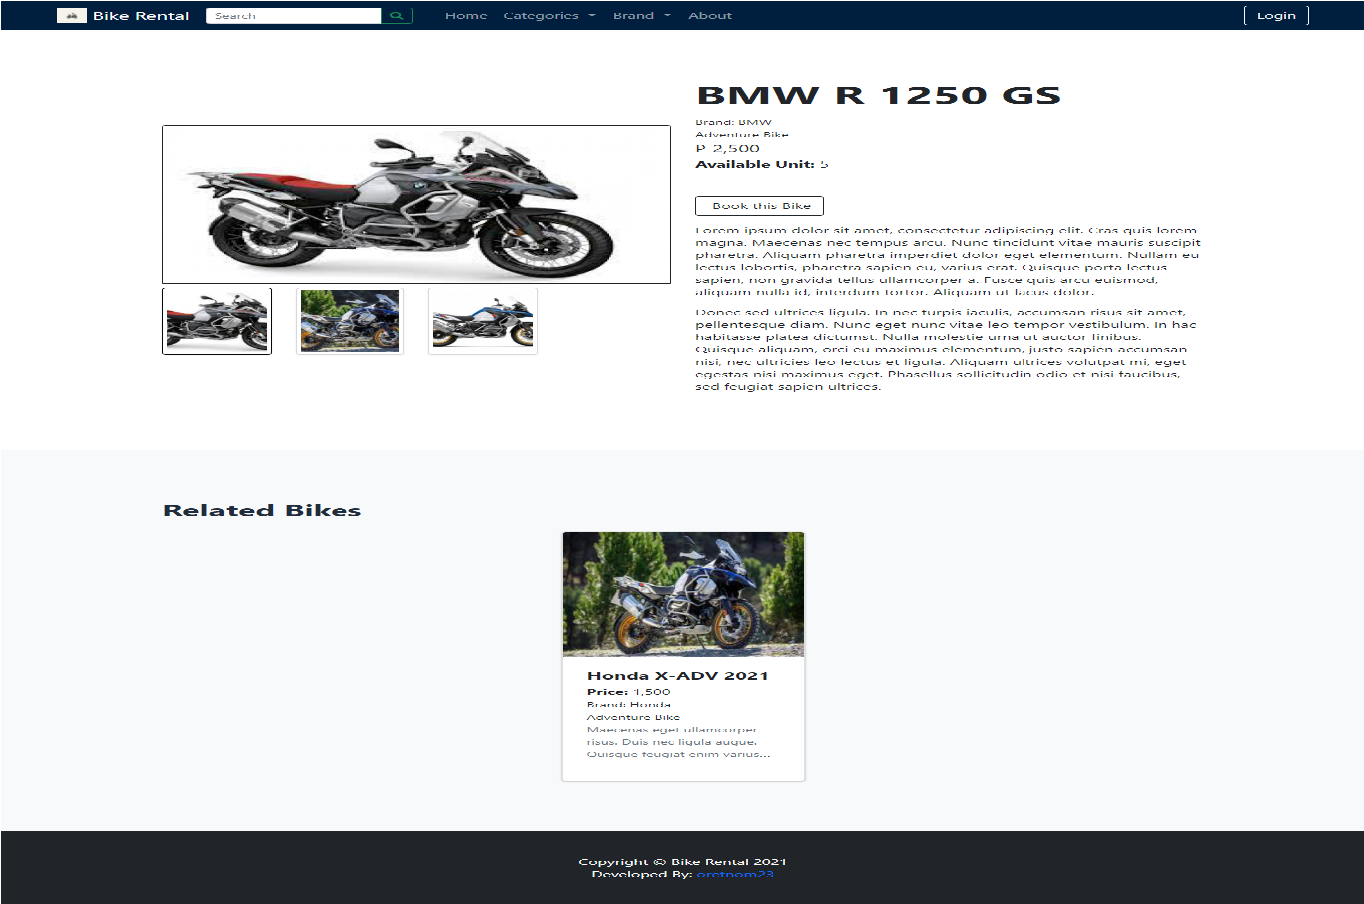 Online Motorcycle (Bike) Rental System